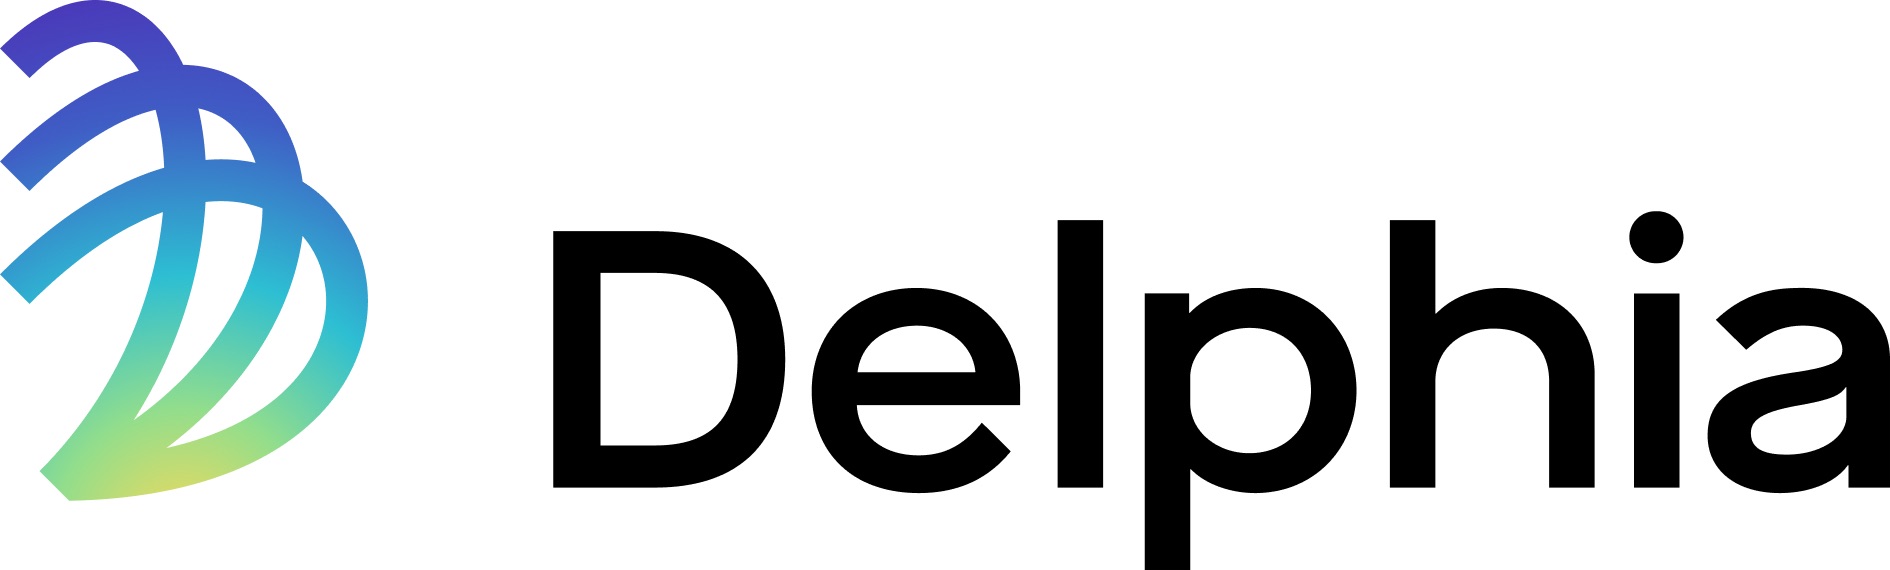 Delphia full logo.jpg